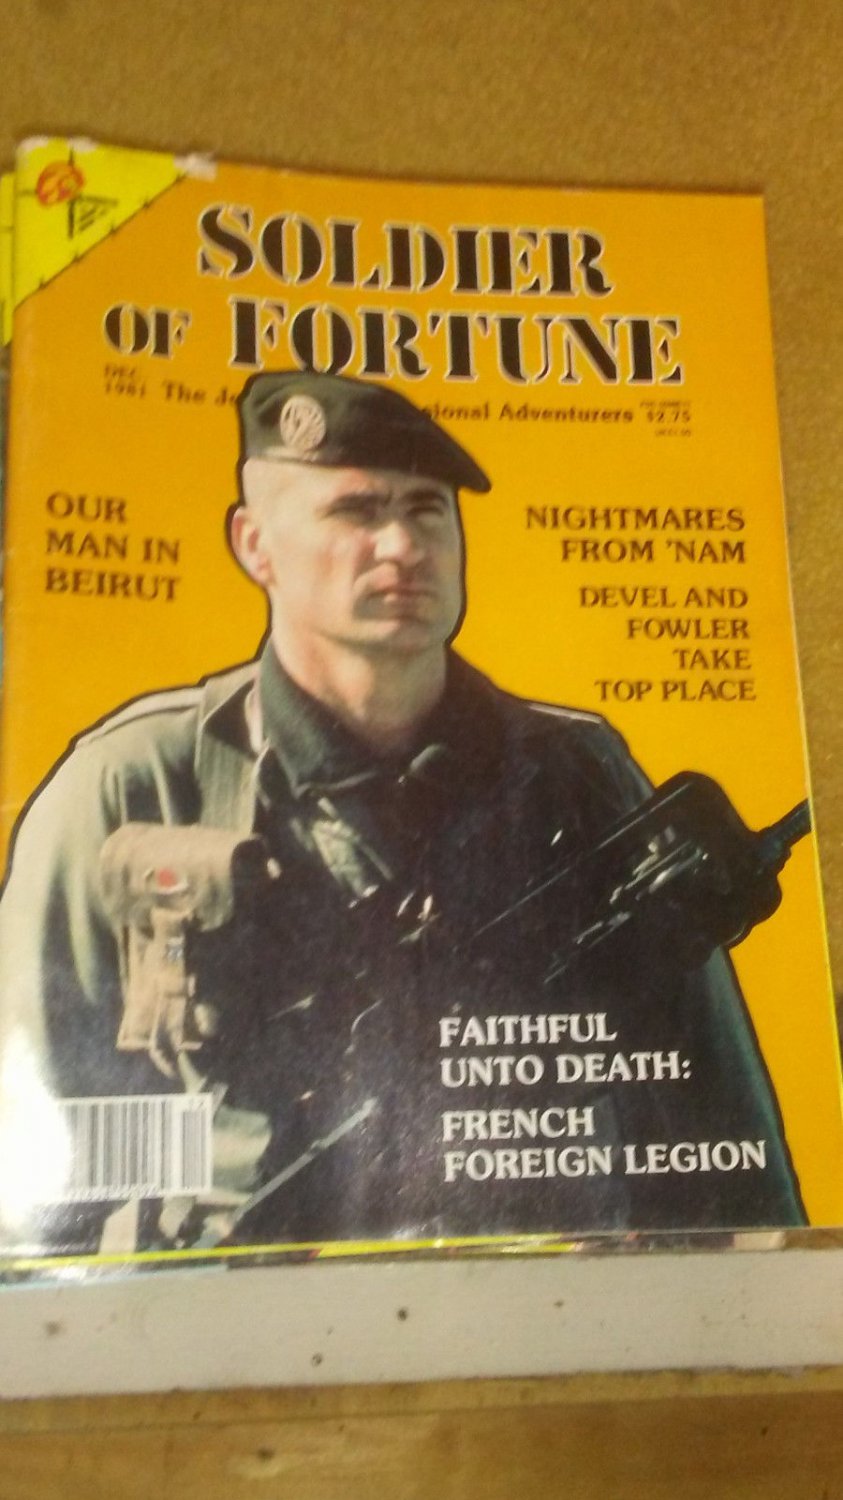 1986 soldier of fortune magazine